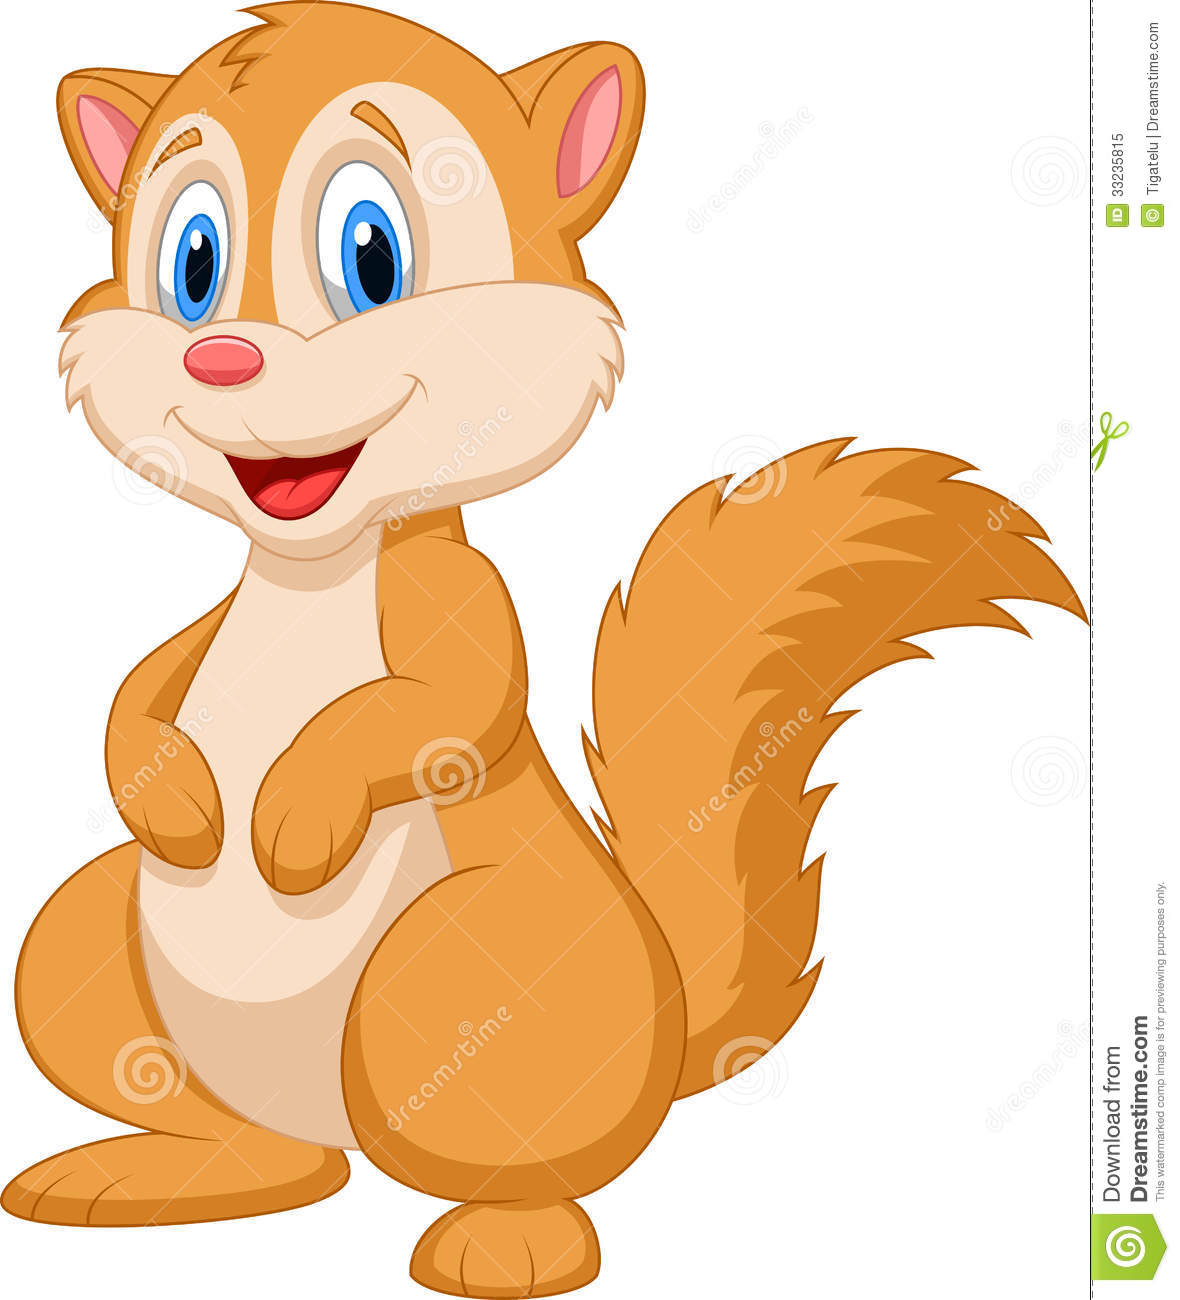 Cute Squirrel Cartoon Royalty Free Stock Photo   Image  33235815